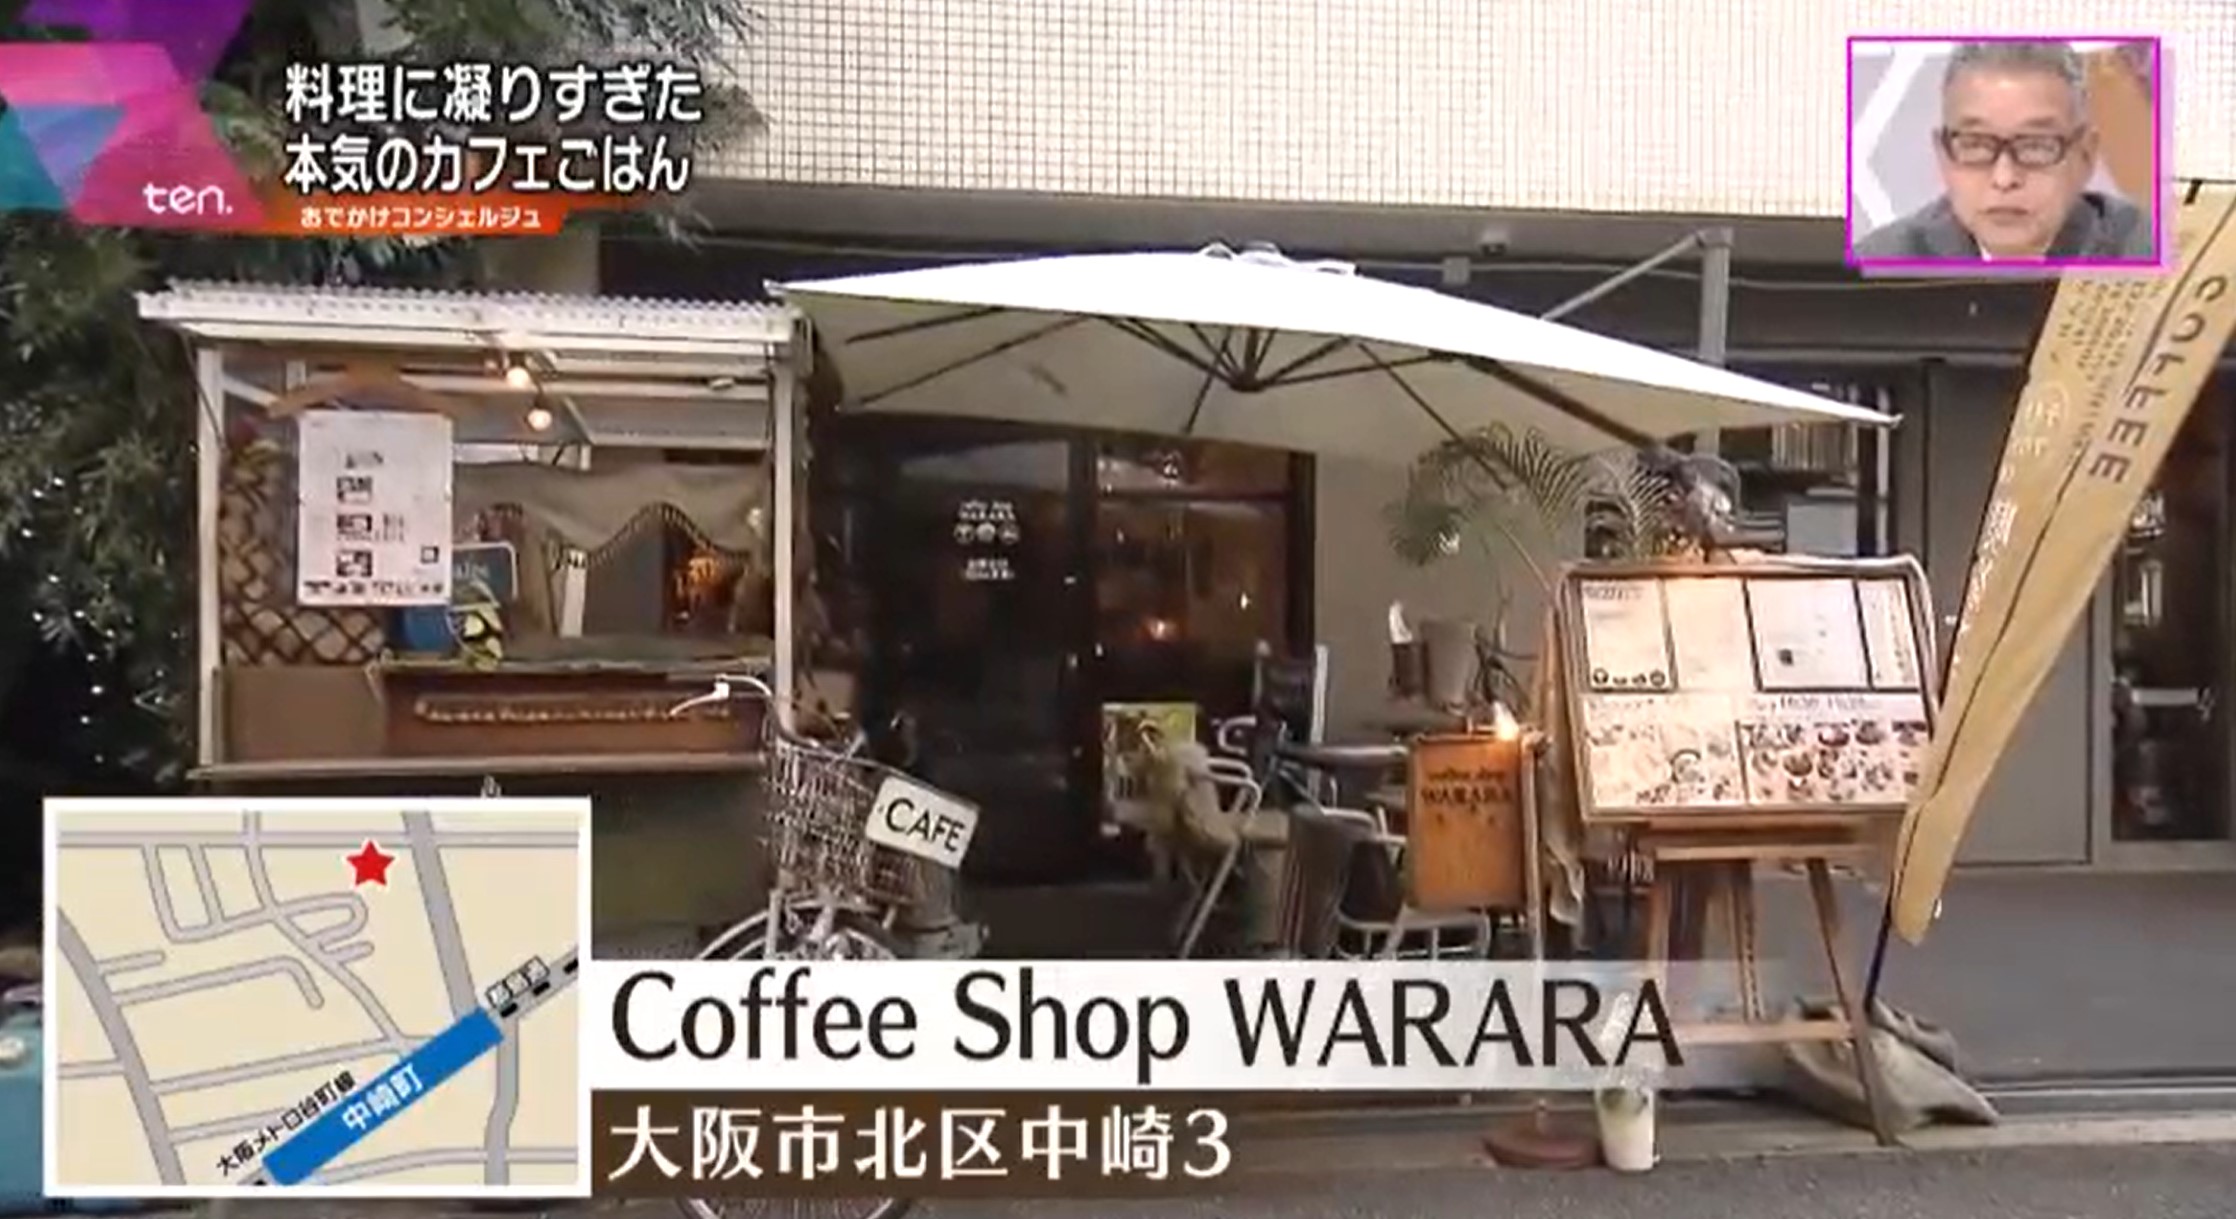 Coffee Shop WARARA 外観